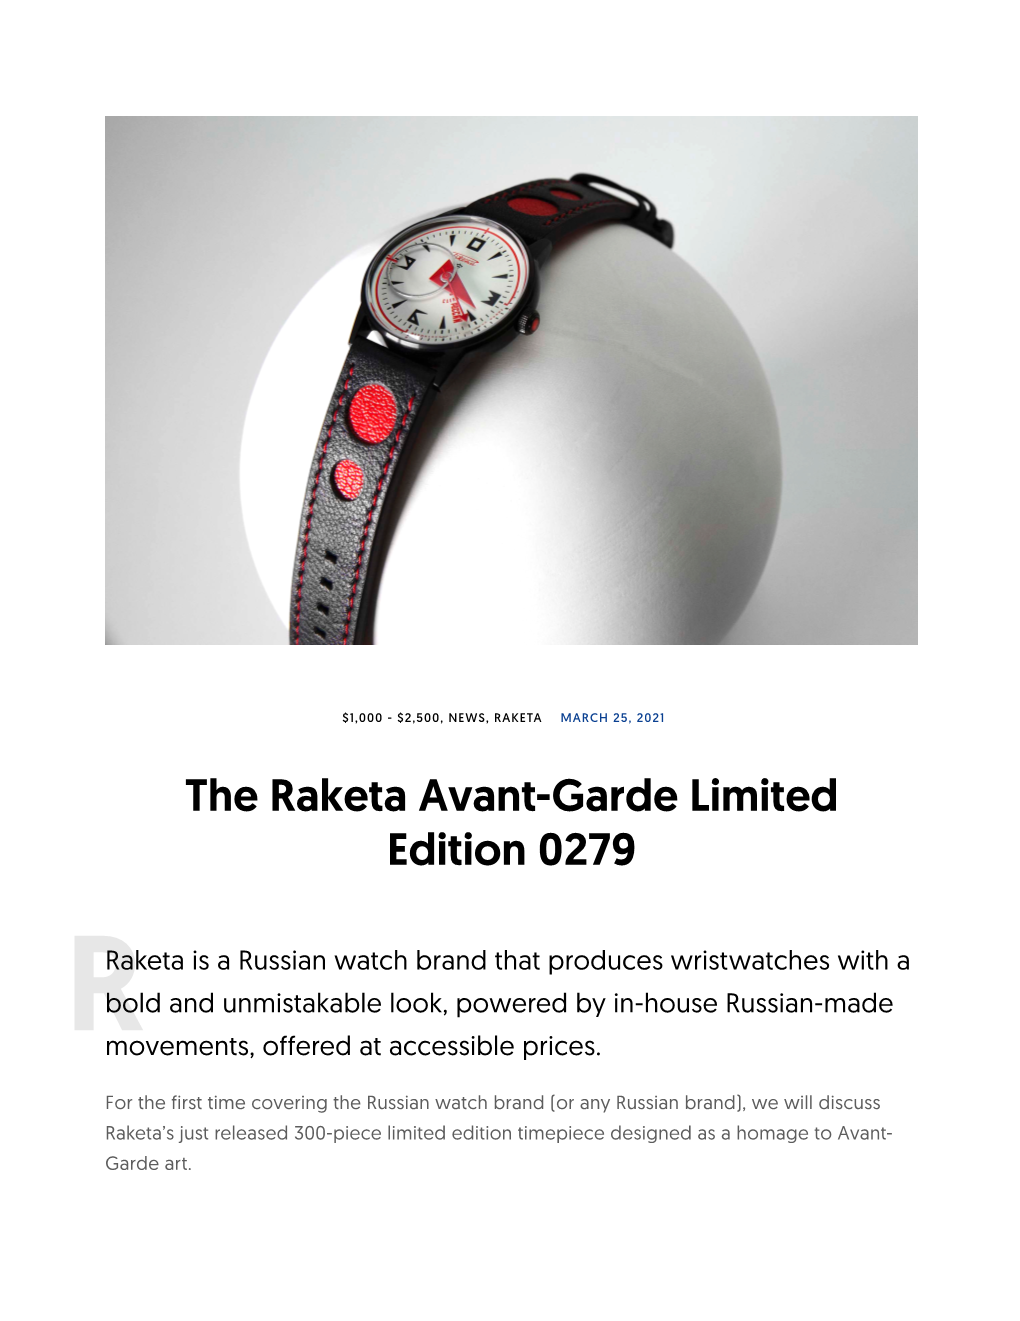 The Raketa Avant-Garde Limited Edition 0279